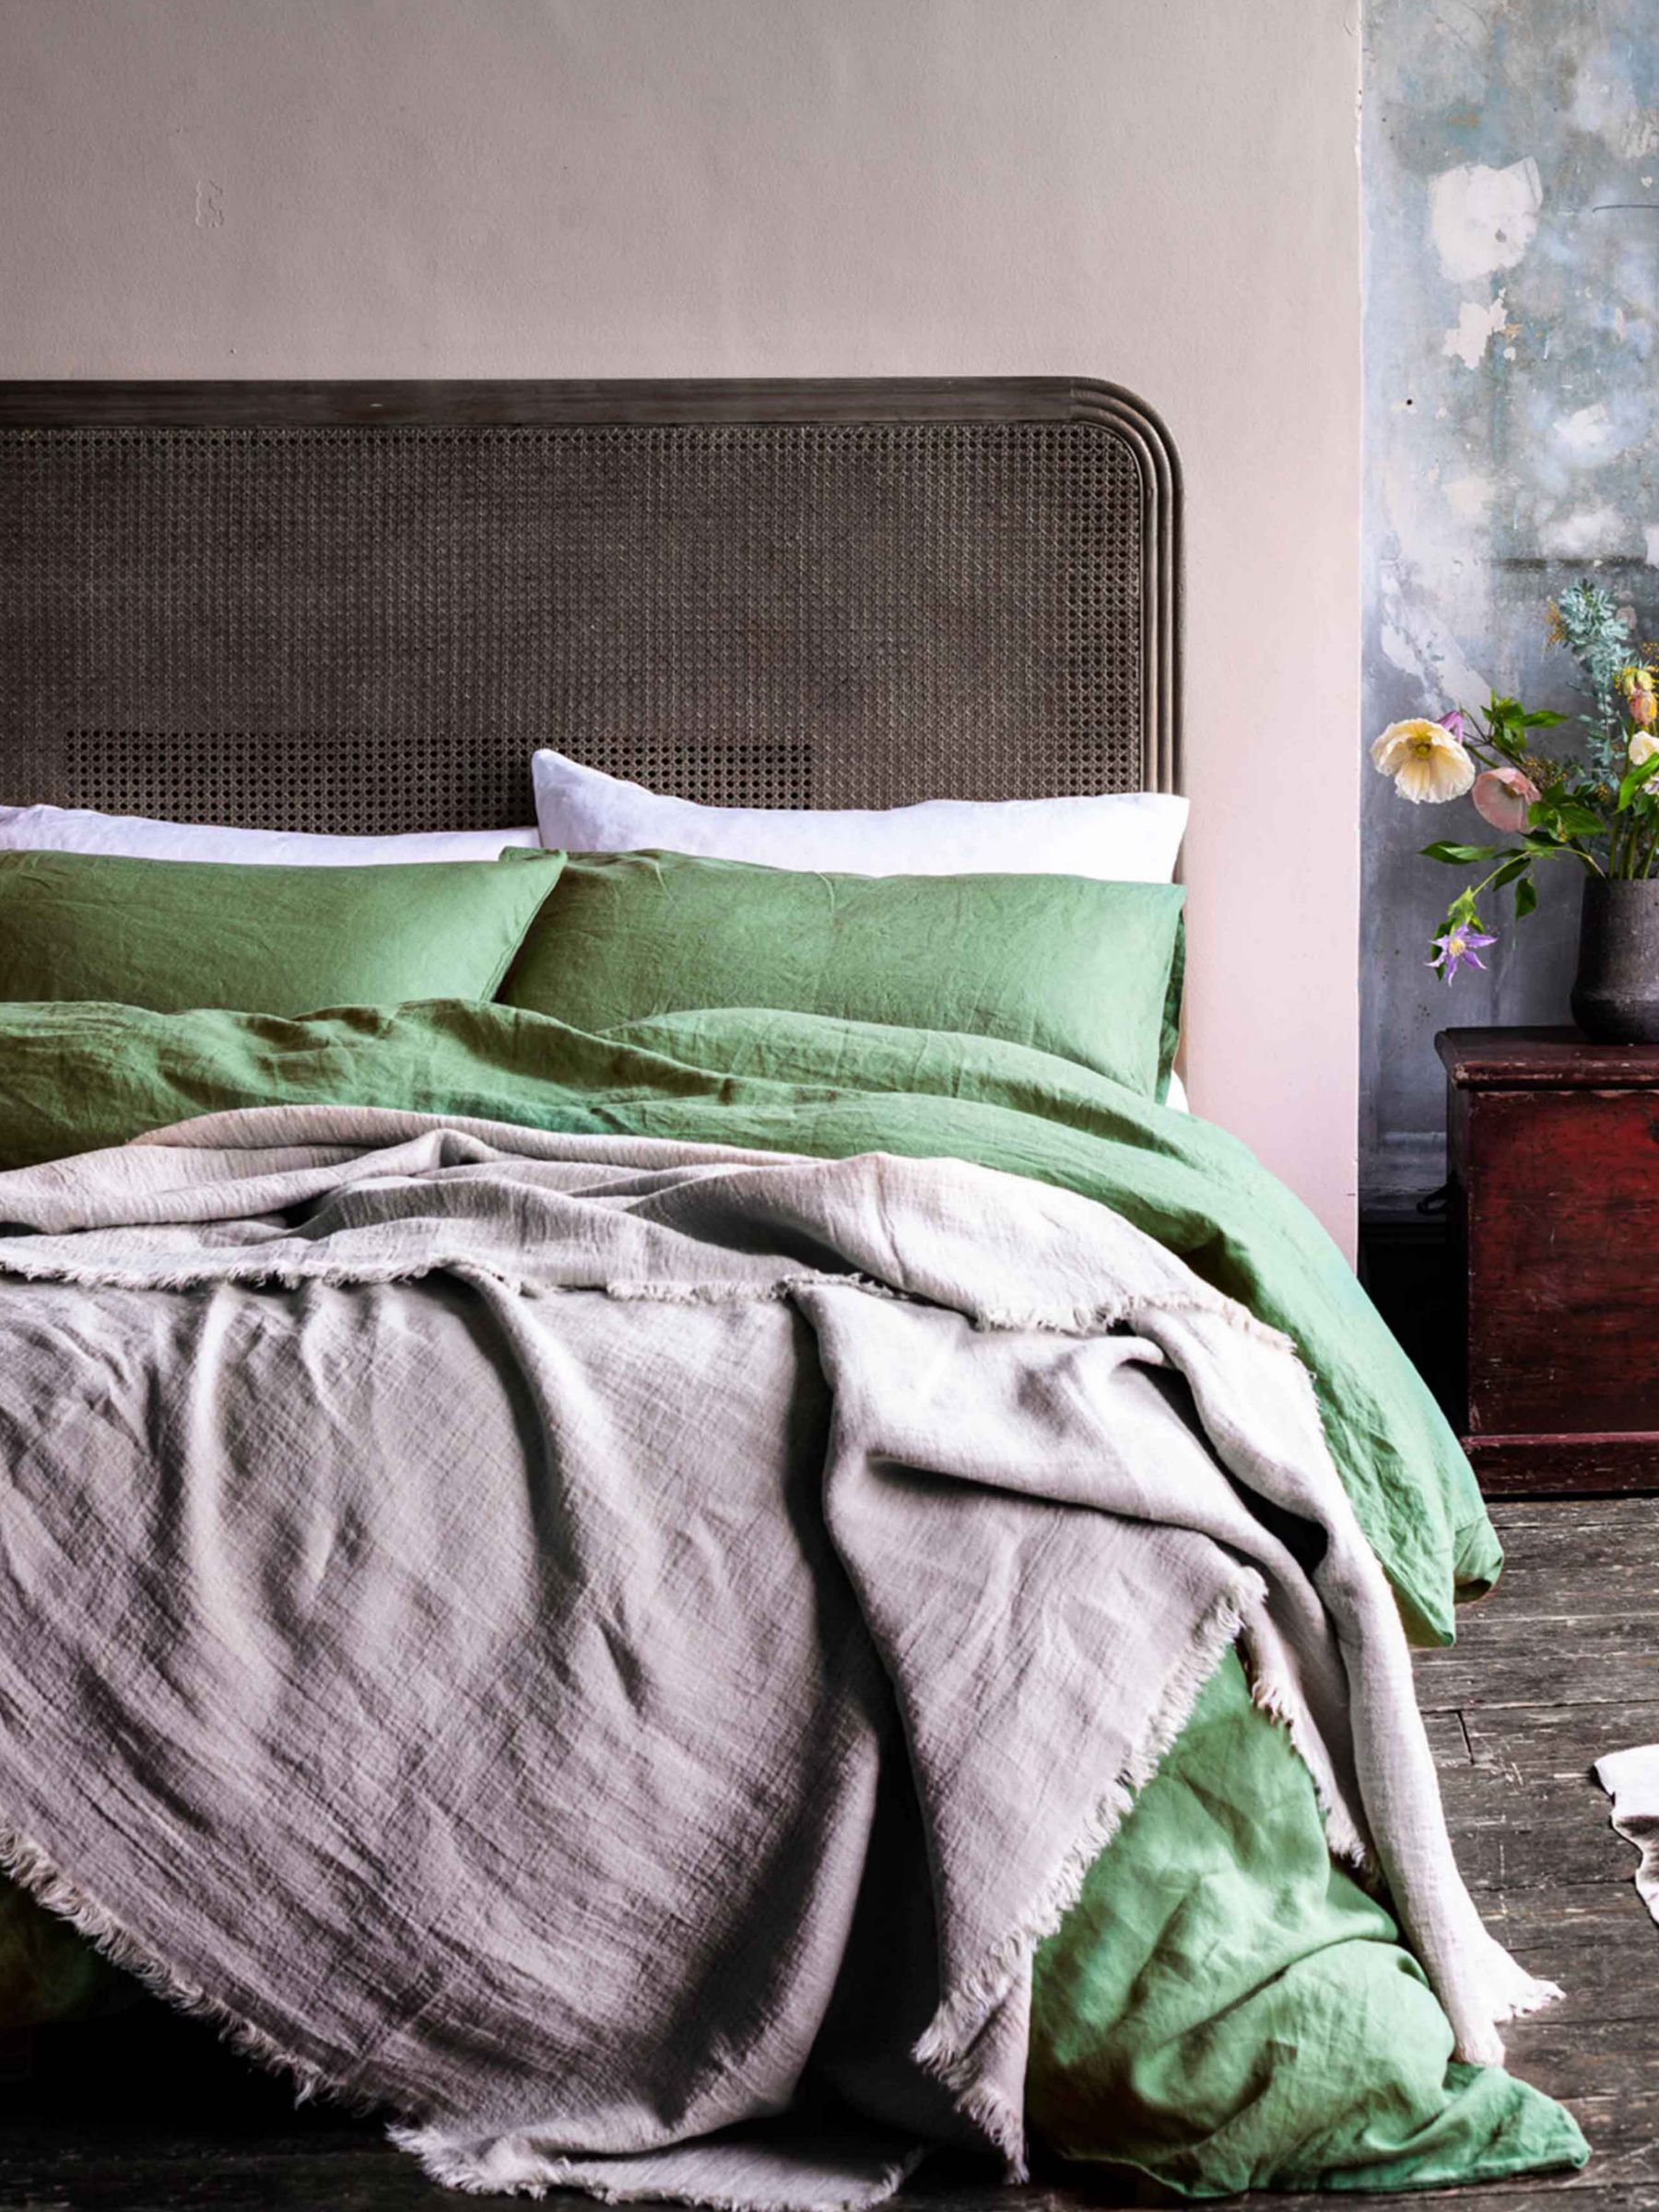 Piglet in Bed Linen Bedding, Forest Green, Pair standard pillowcases